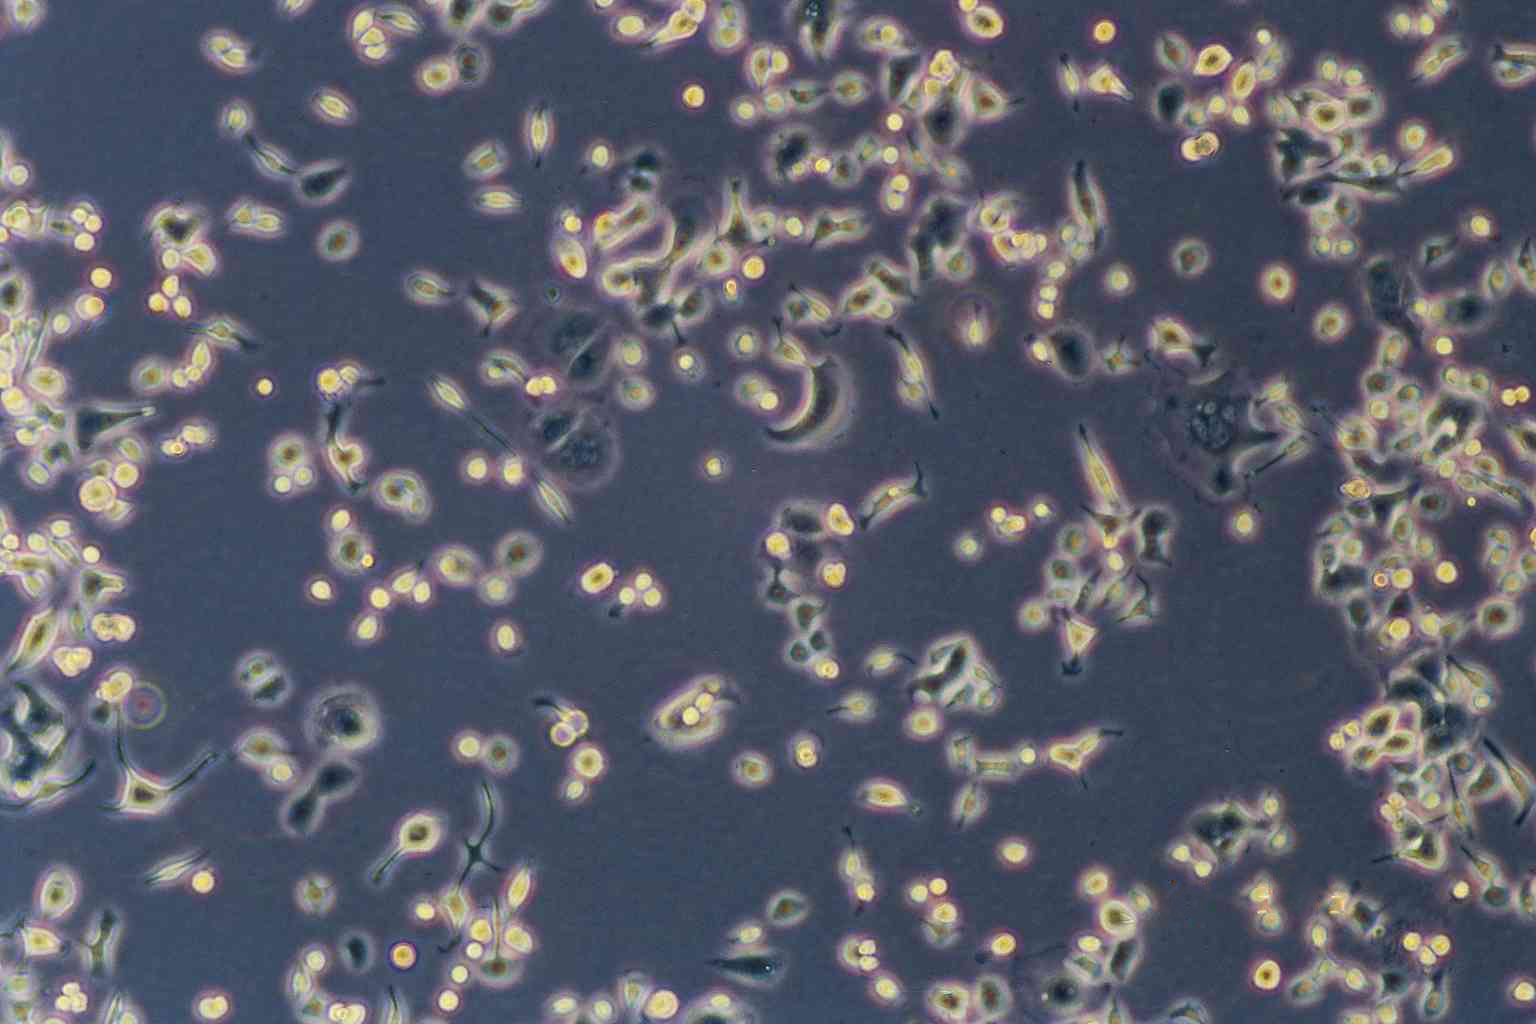 SN12C-PM6 epithelioid cells人肾癌细胞系,SN12C-PM6 epithelioid cells